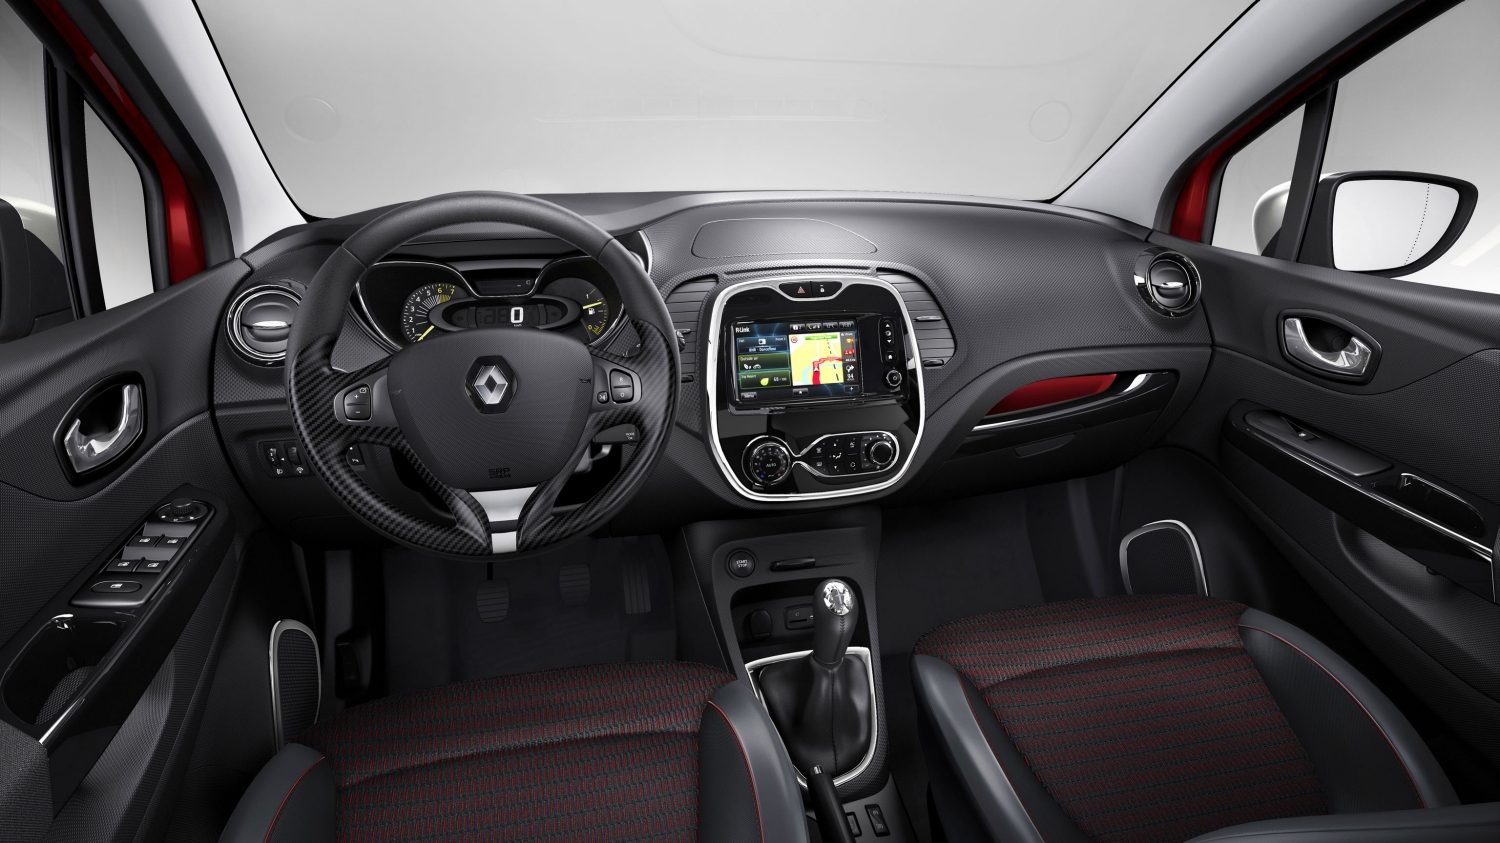 Renault Captur Backgrounds on Wallpapers Vista